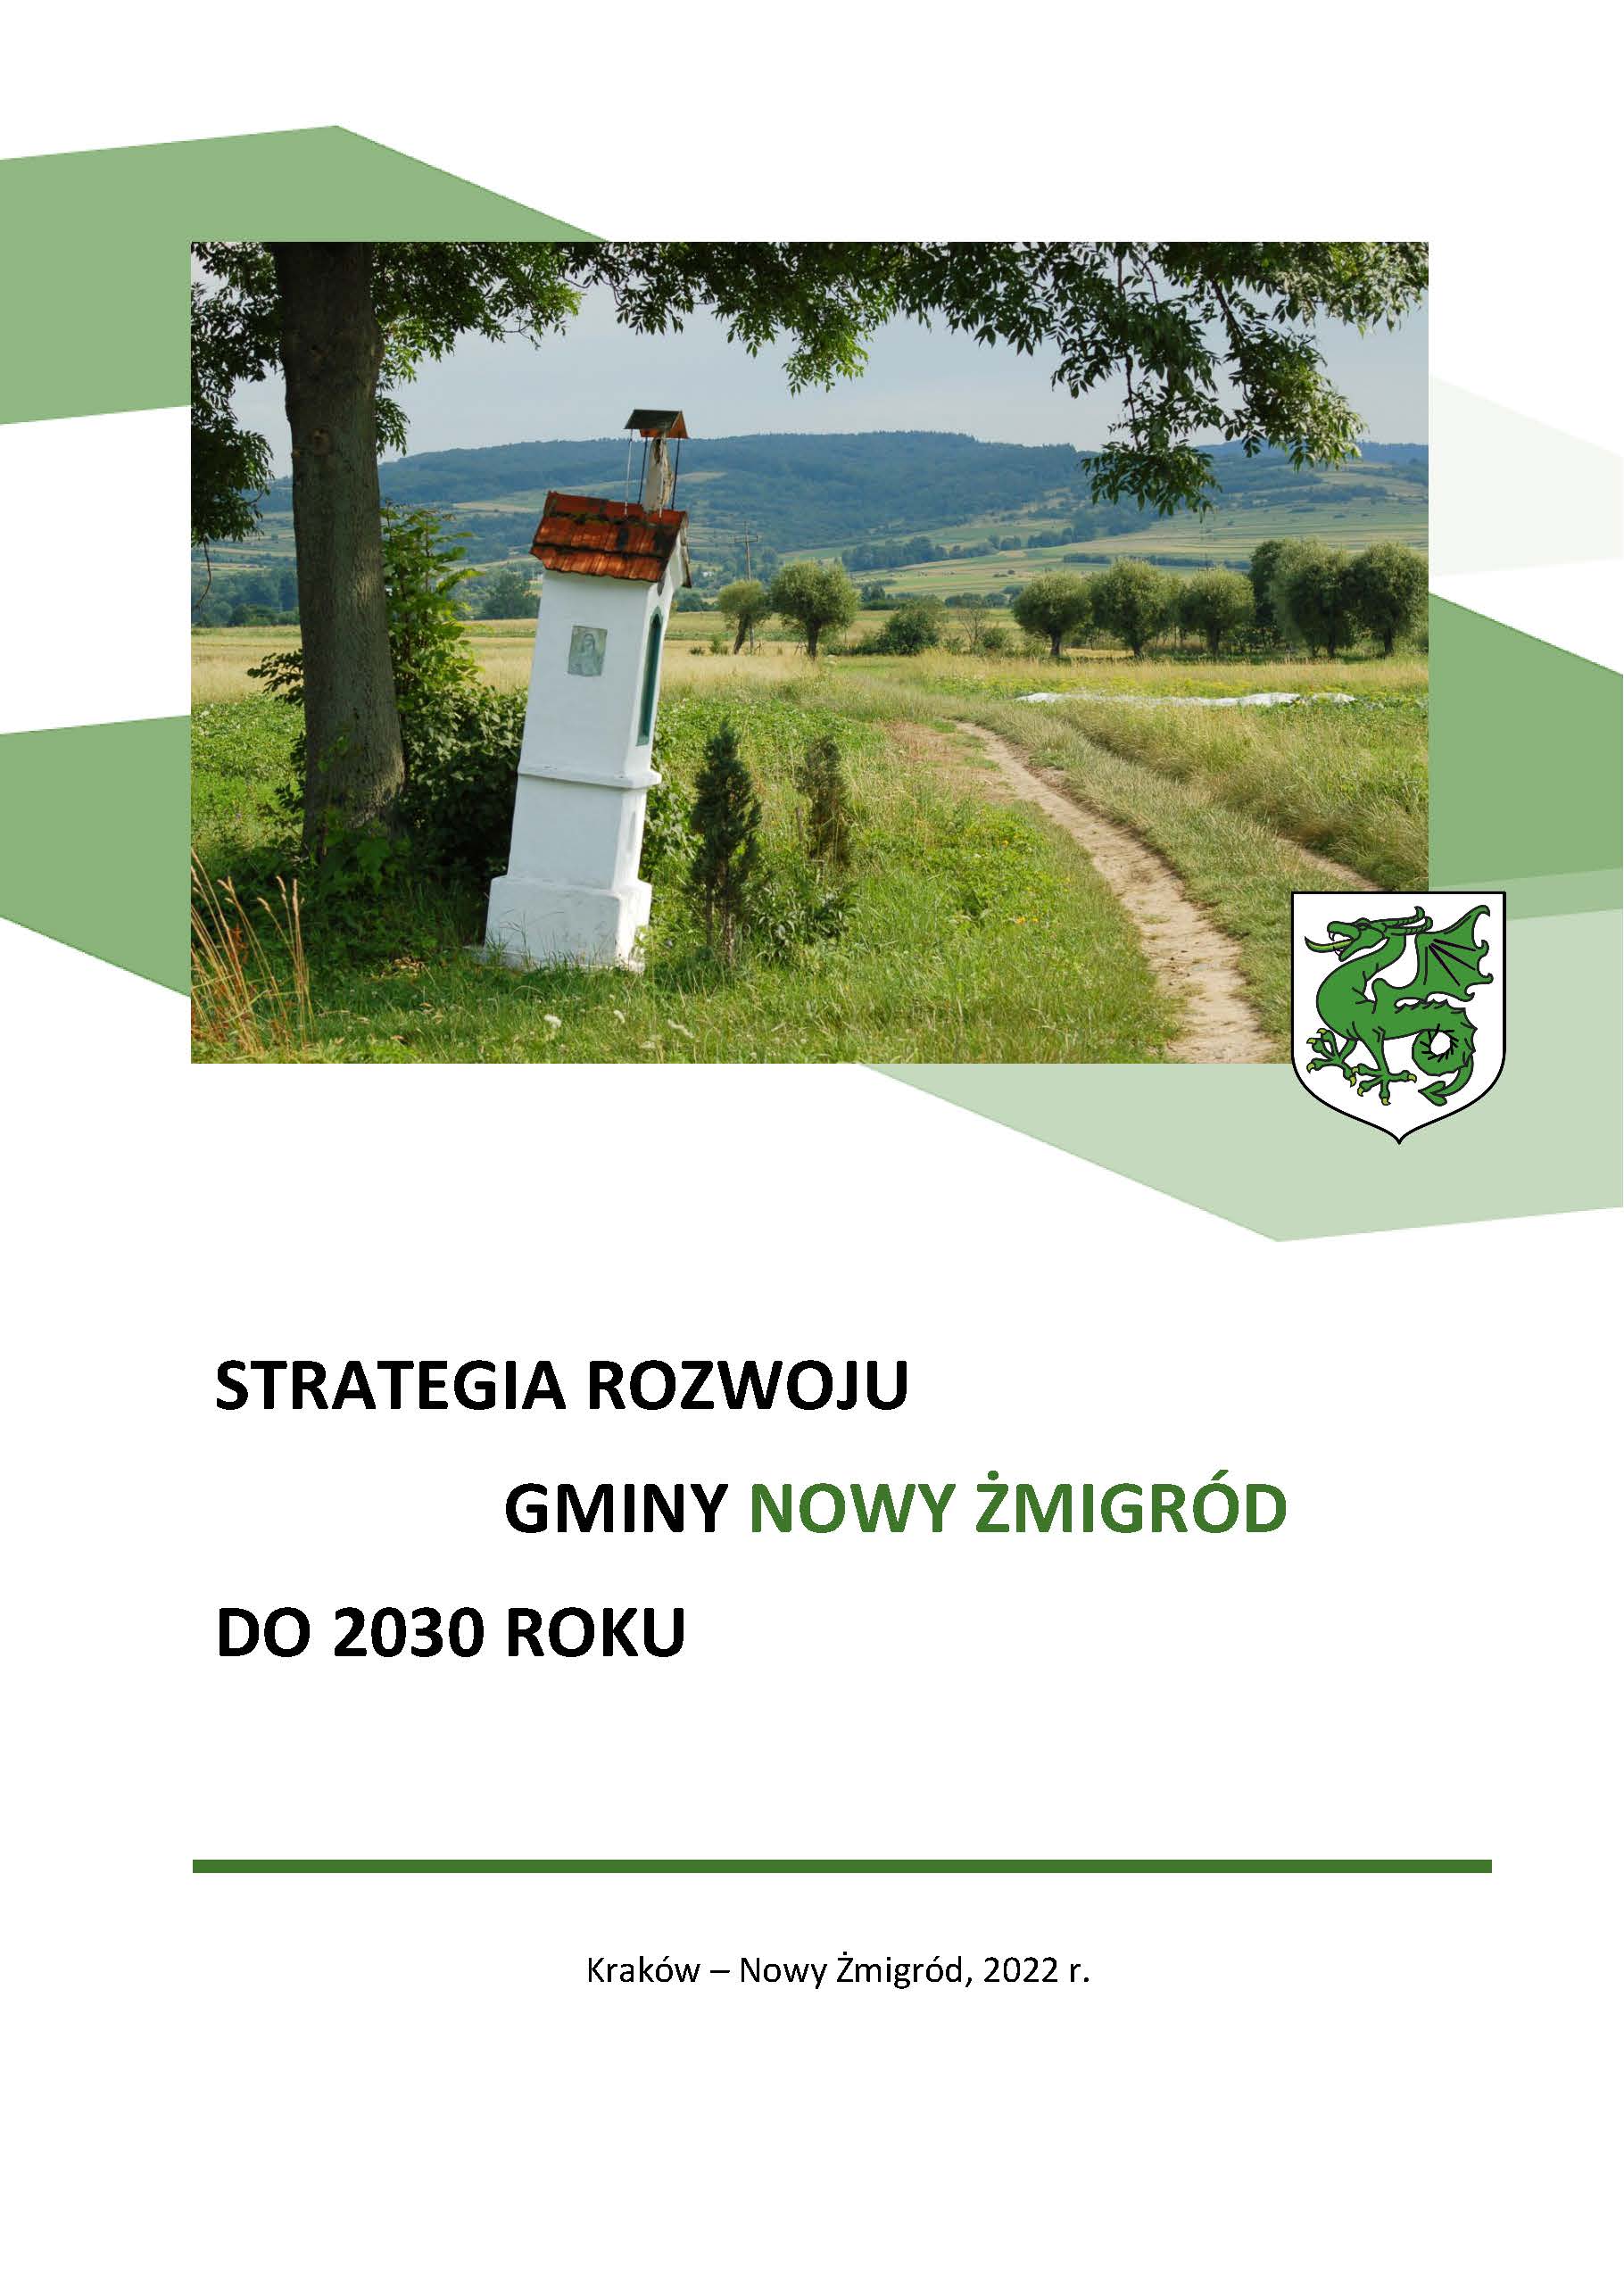 SRG Nowy Żmigród projekt 8.02 Strona 001